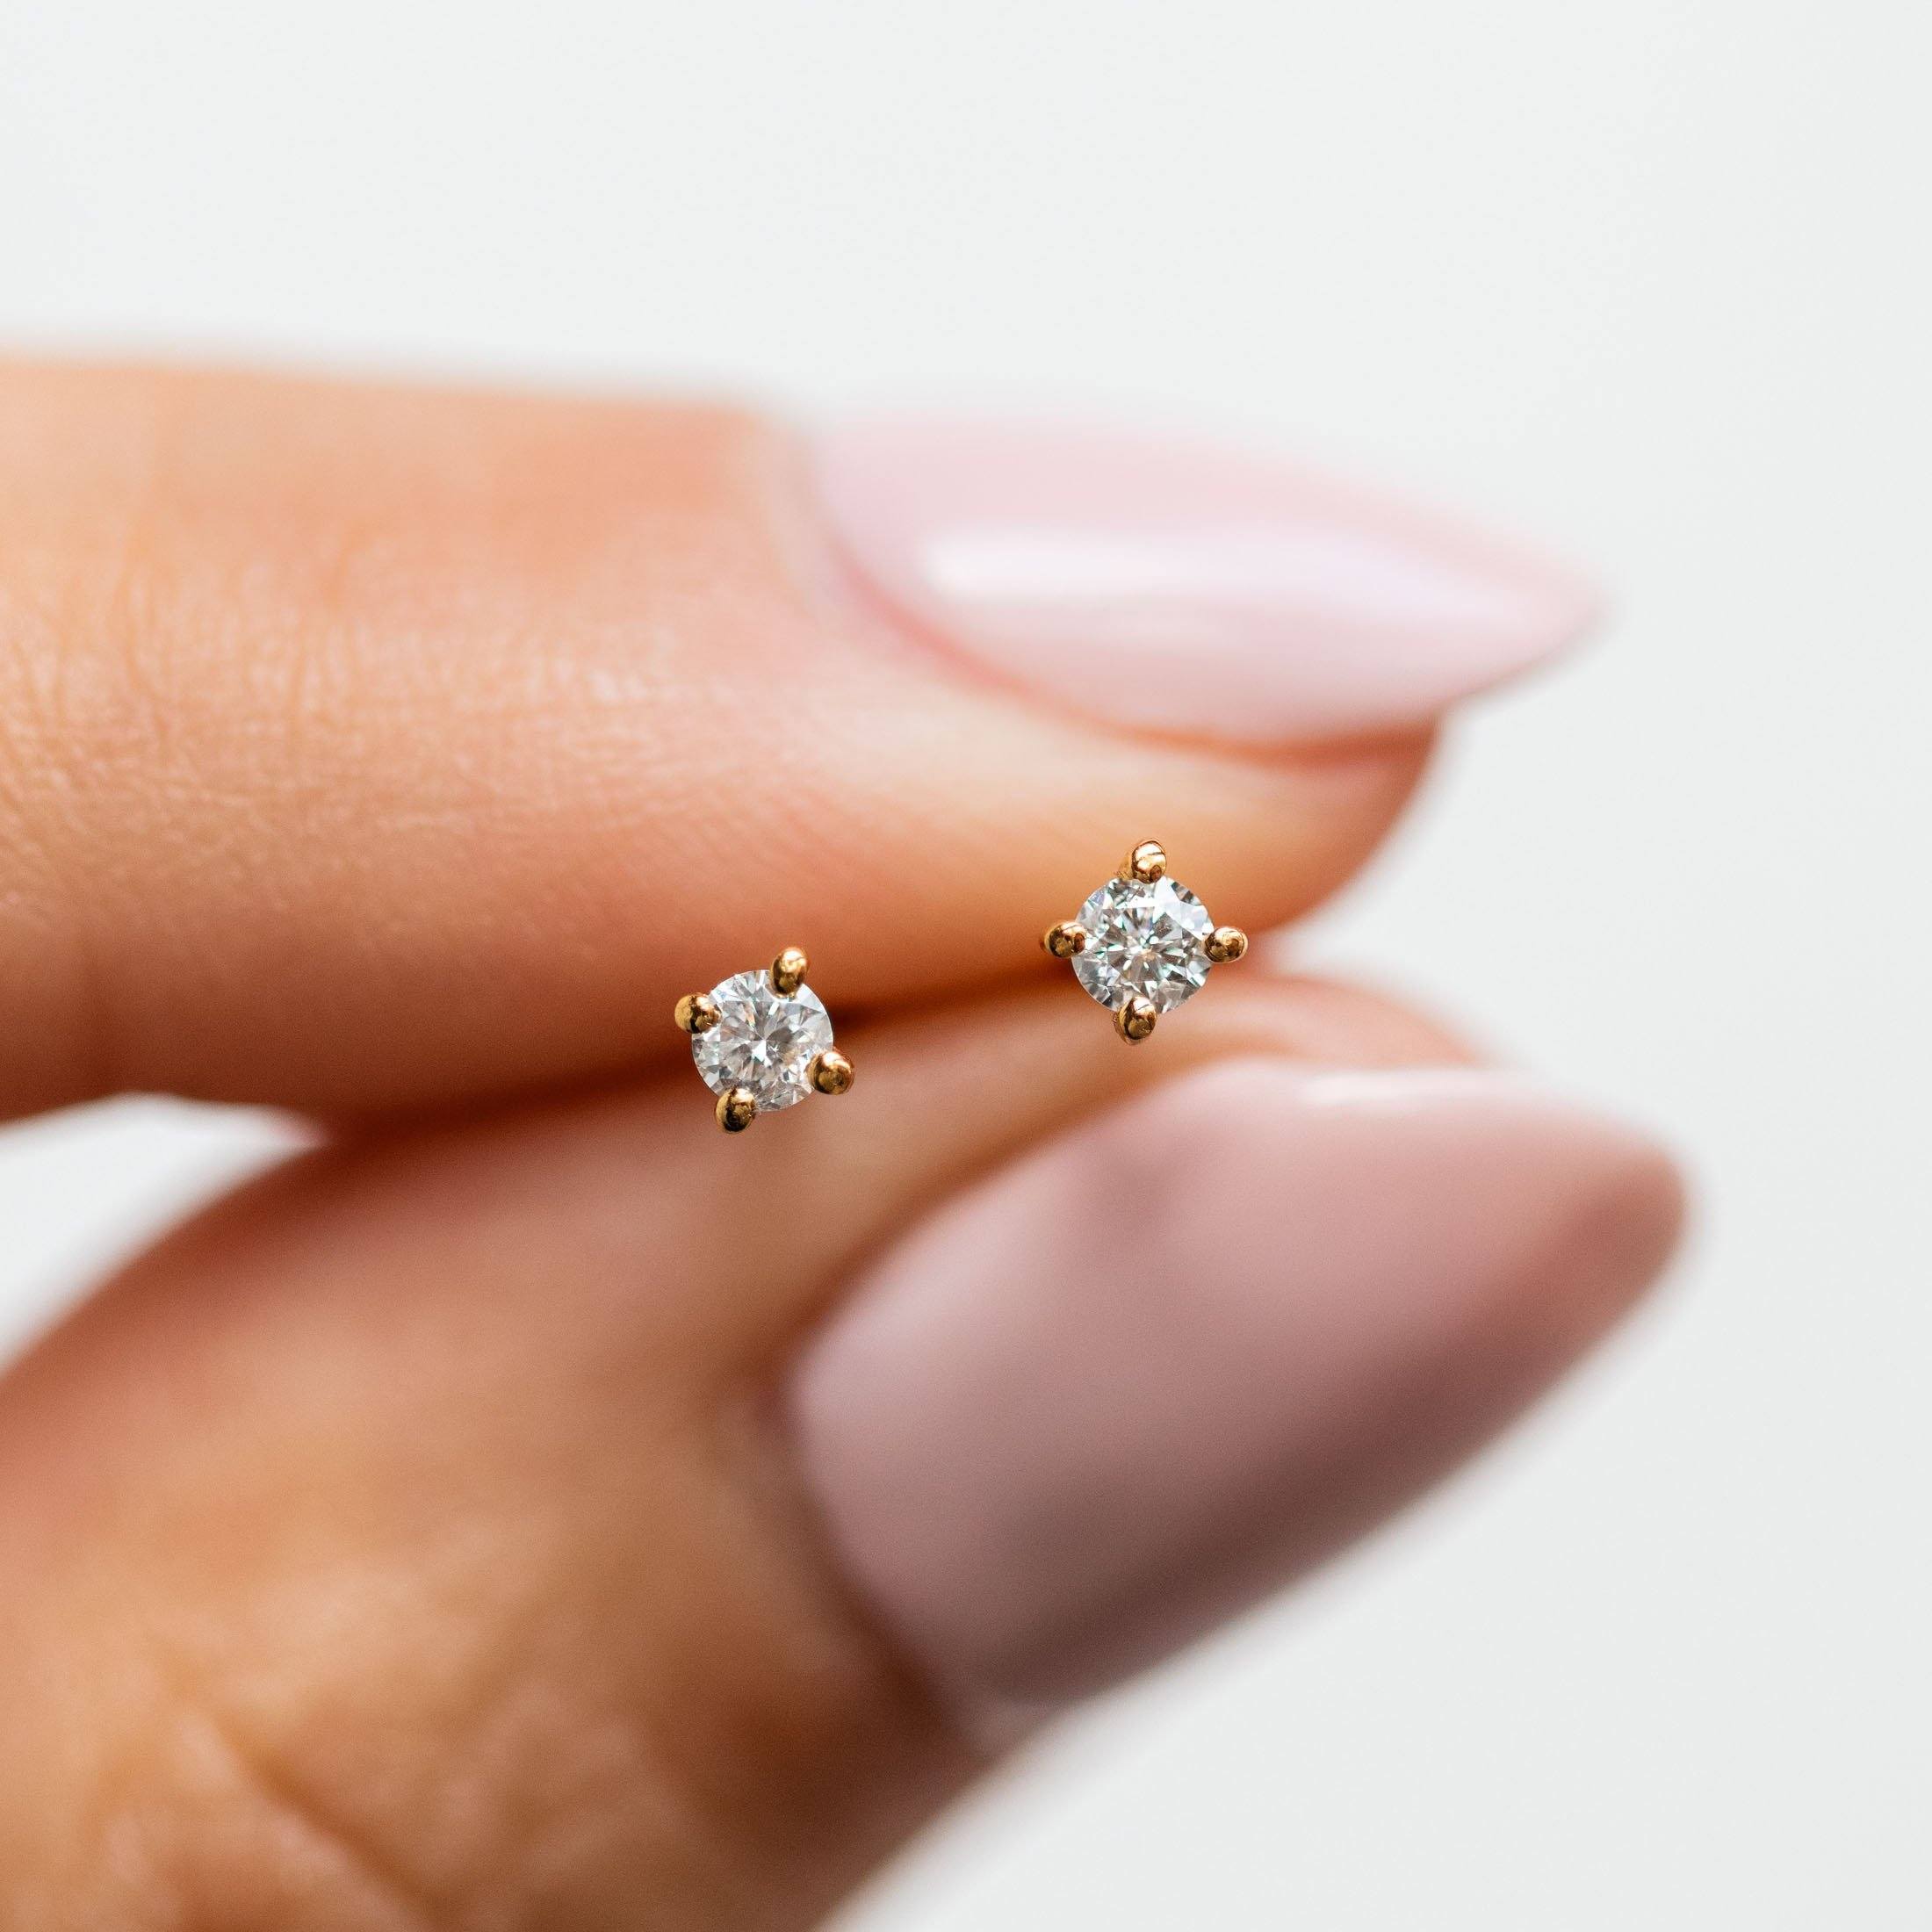 Buy quality Diamond Earring Stud Jewellery by Royale Diamonds in Pune